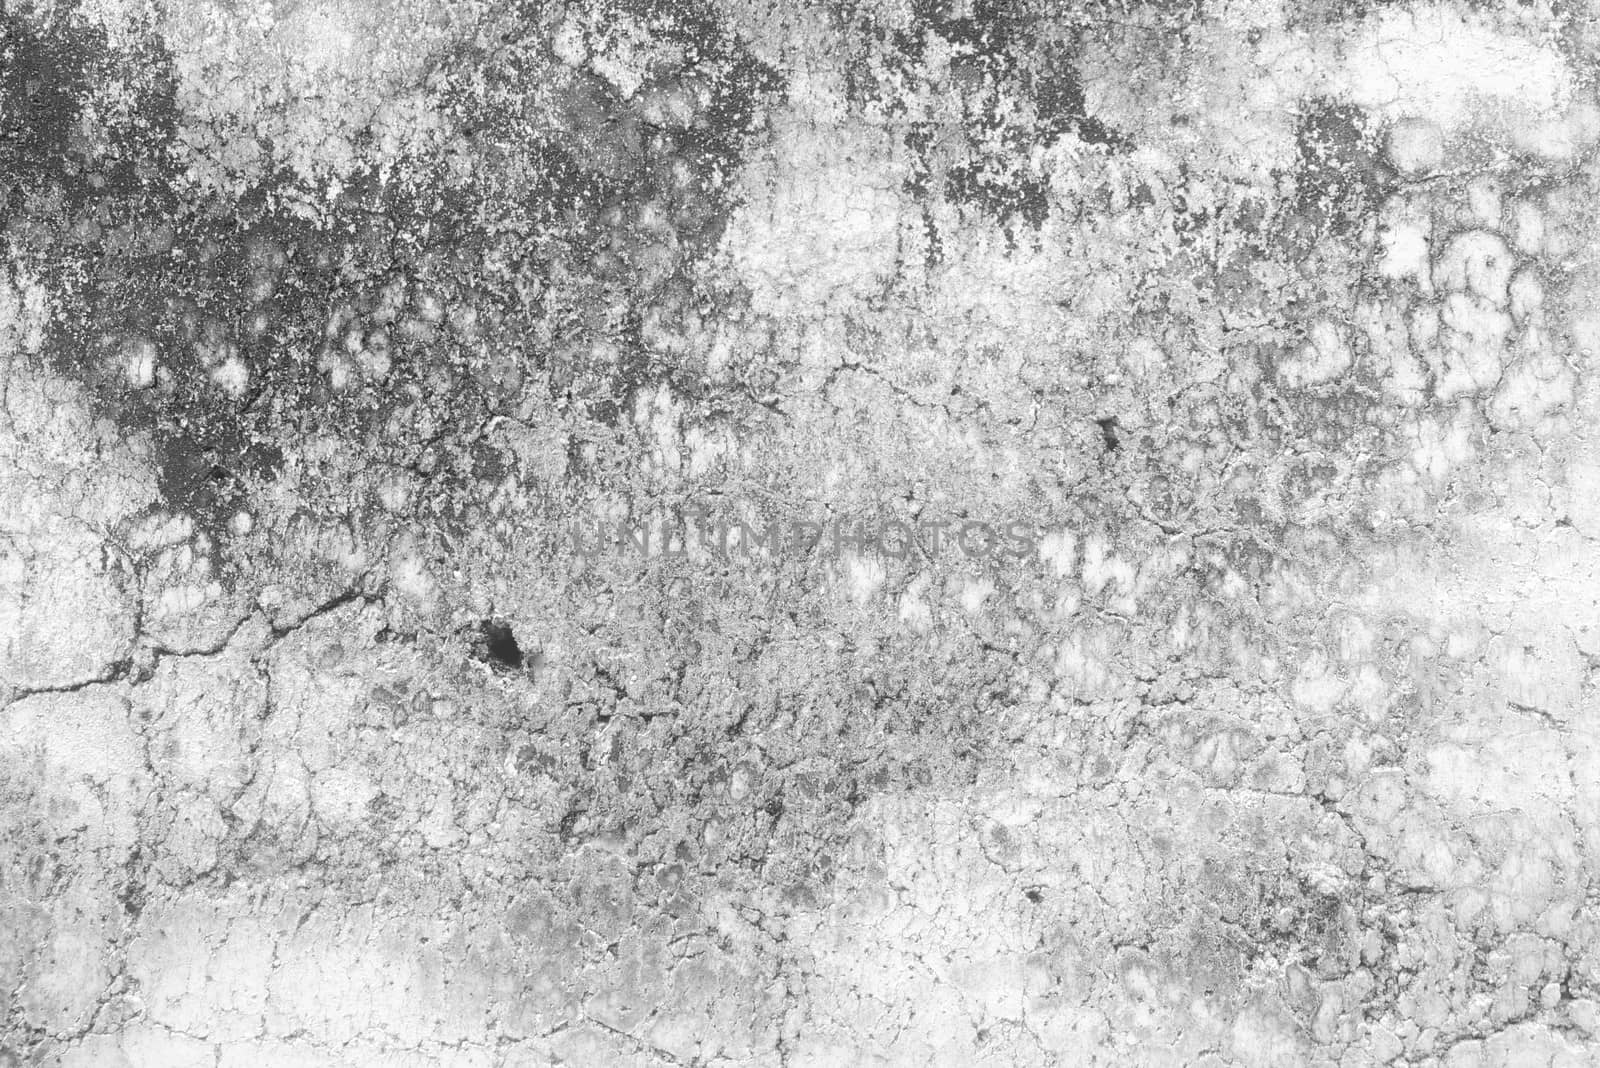 Grunge Cement Wall Texture Background.